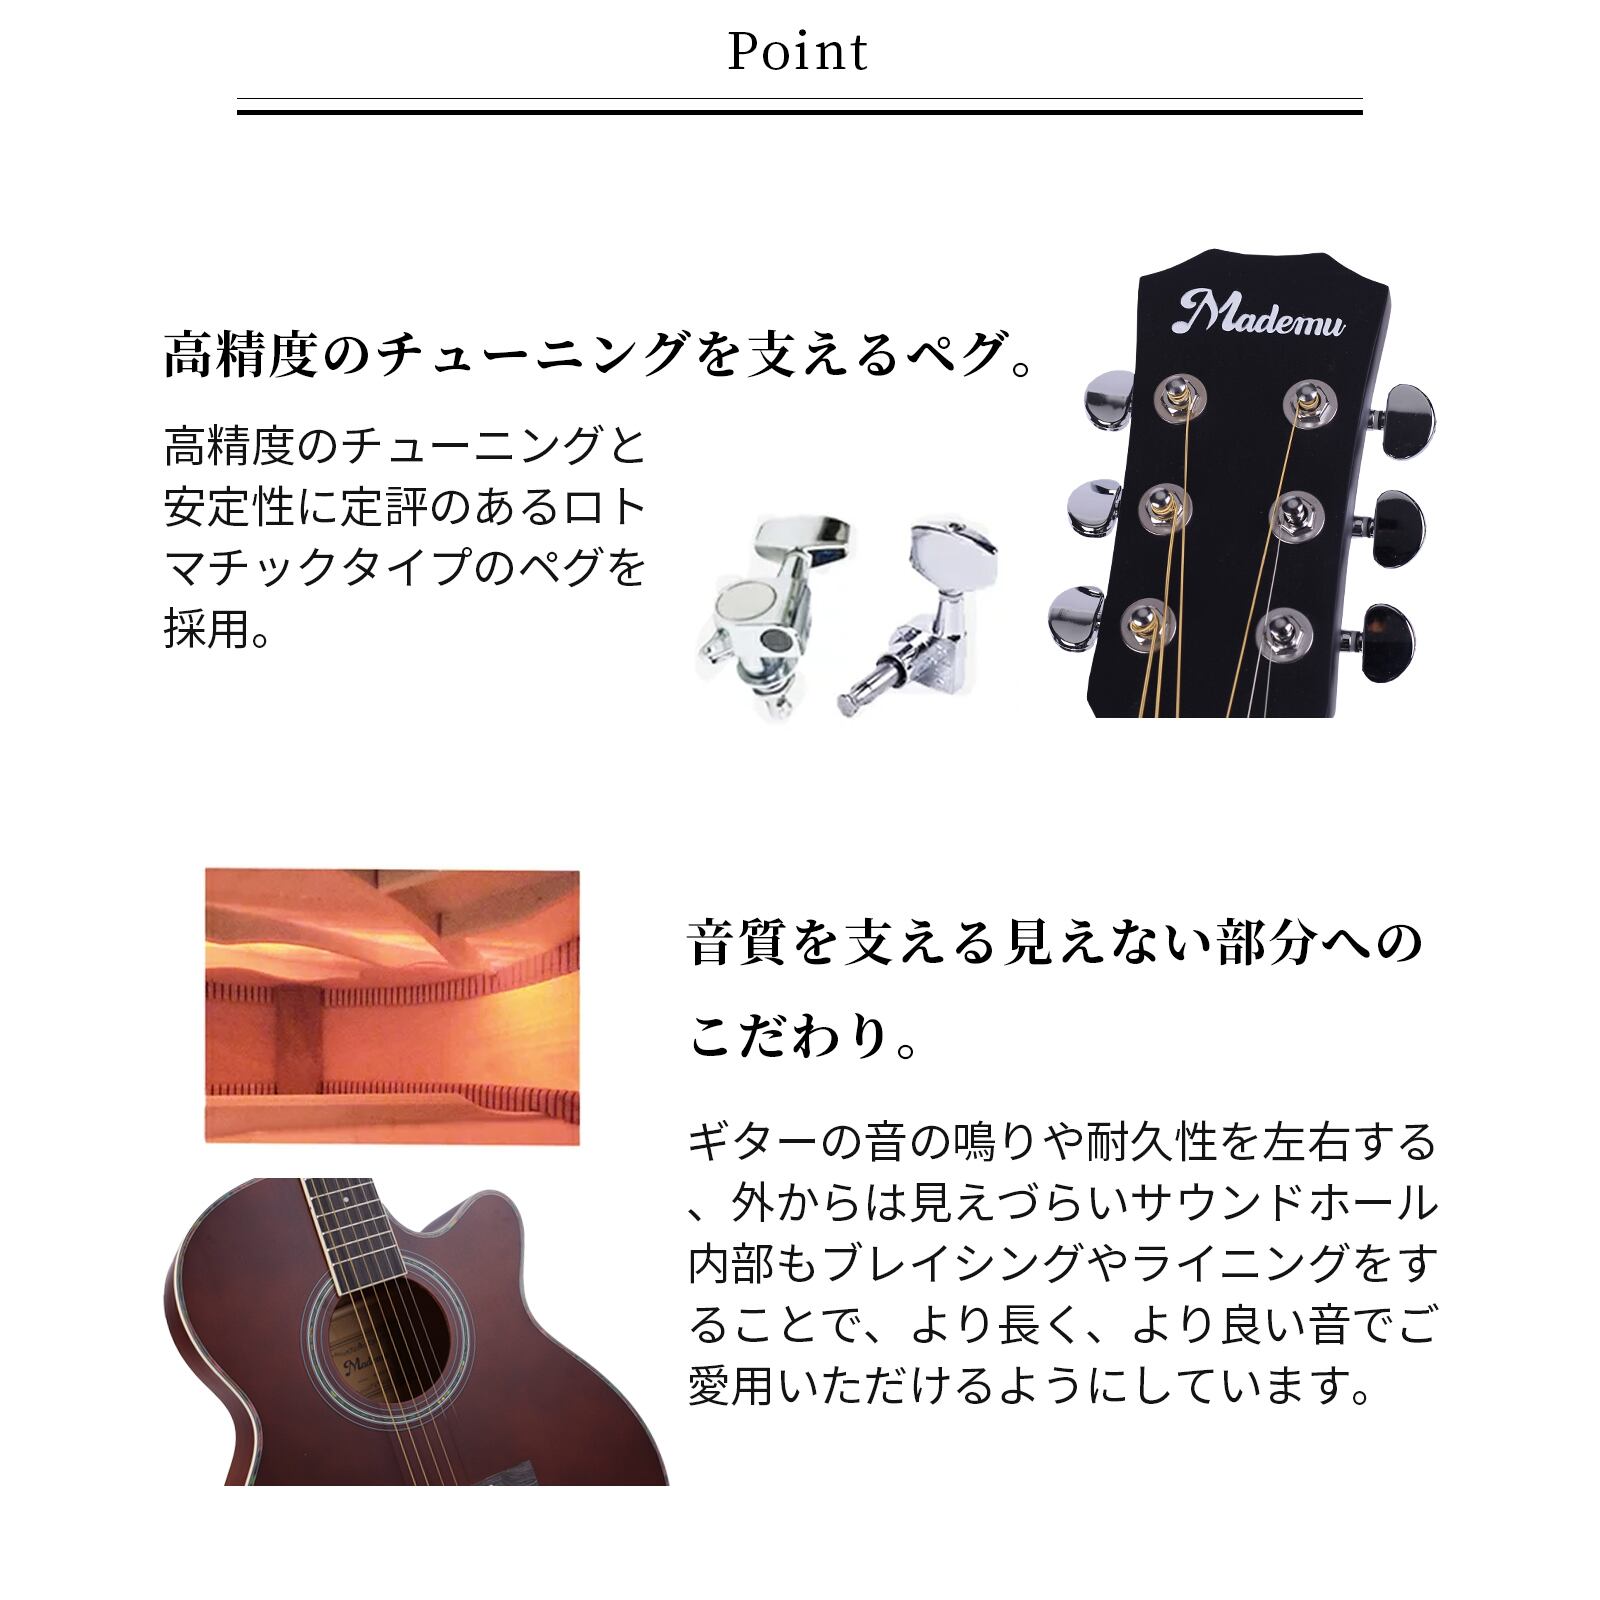 【M1643-113-76】アコースティックギター 初心者16点セット